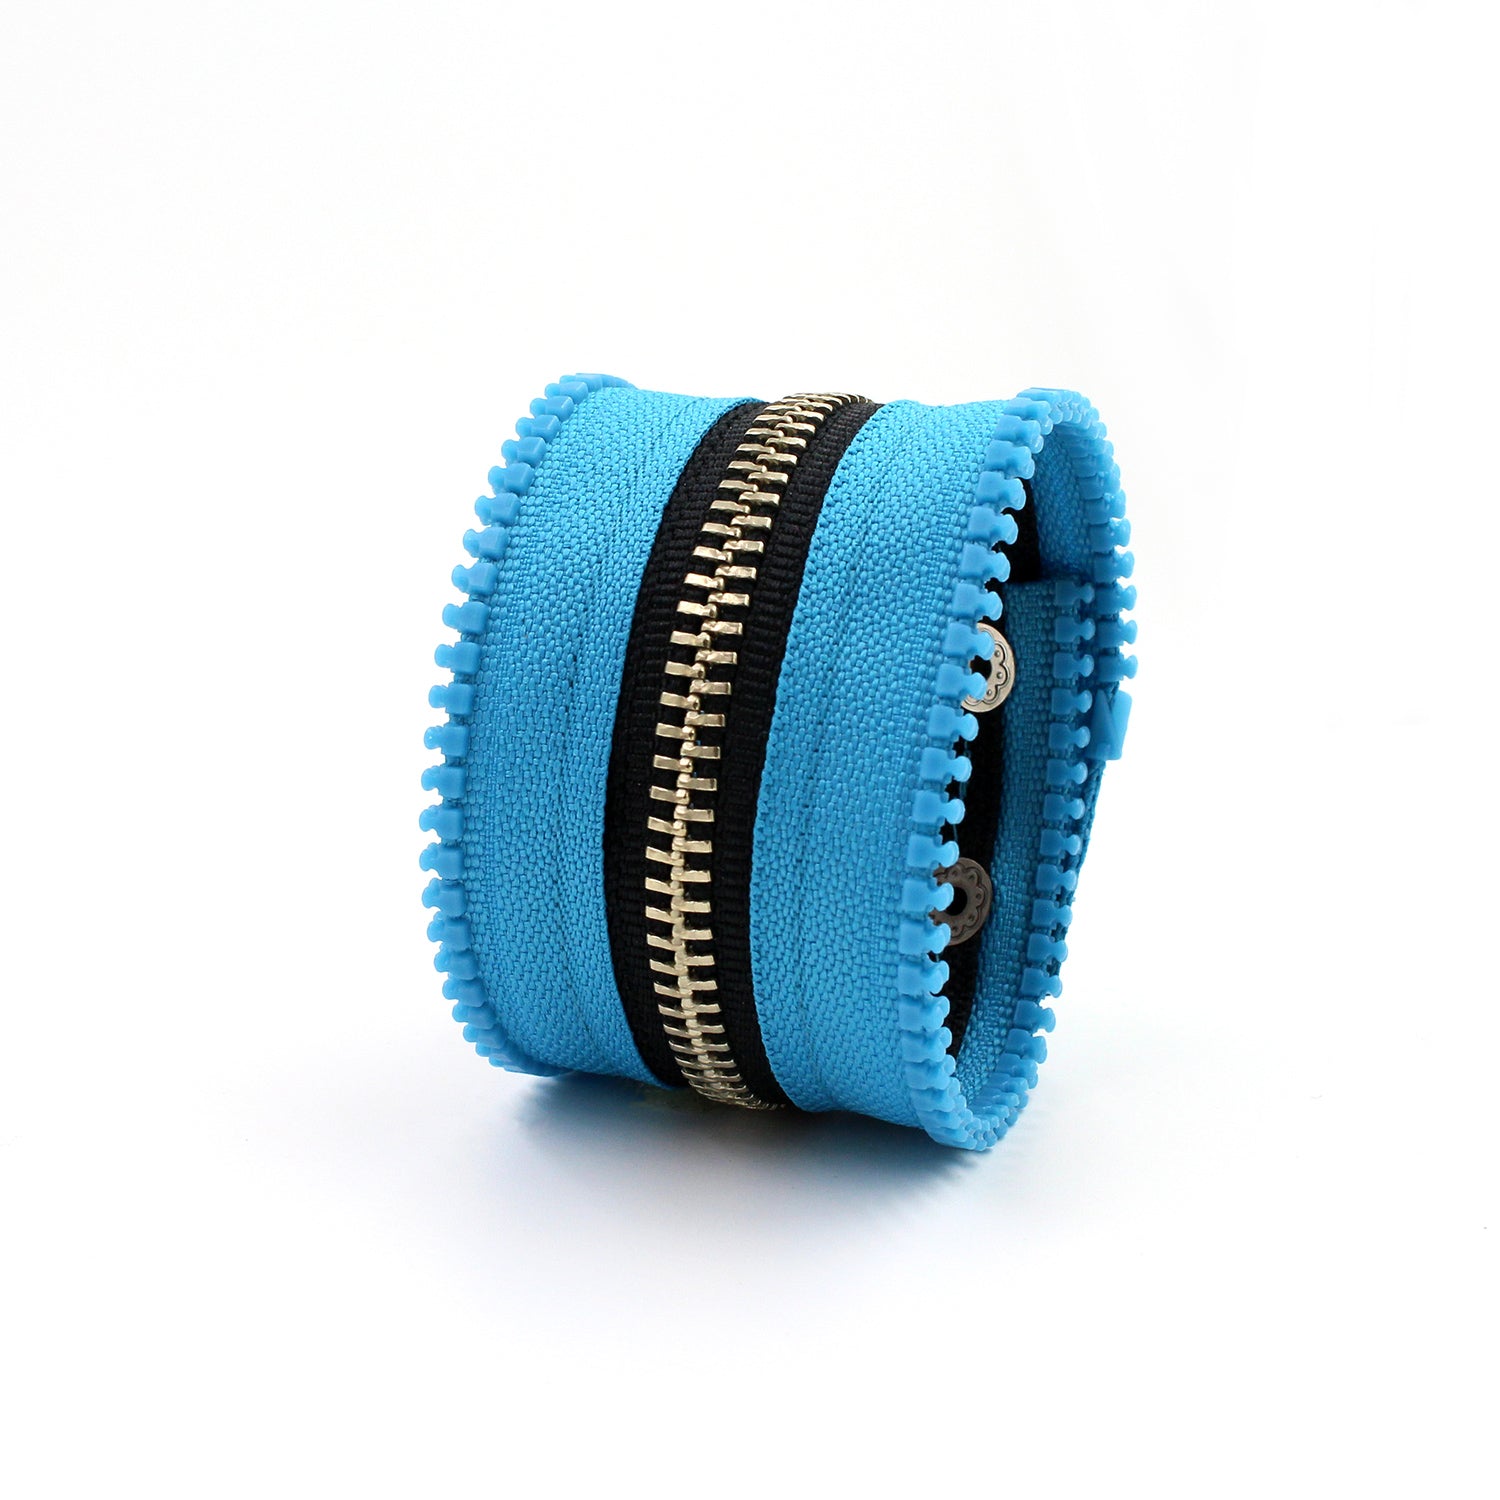 Working Blue Zip Bracelet